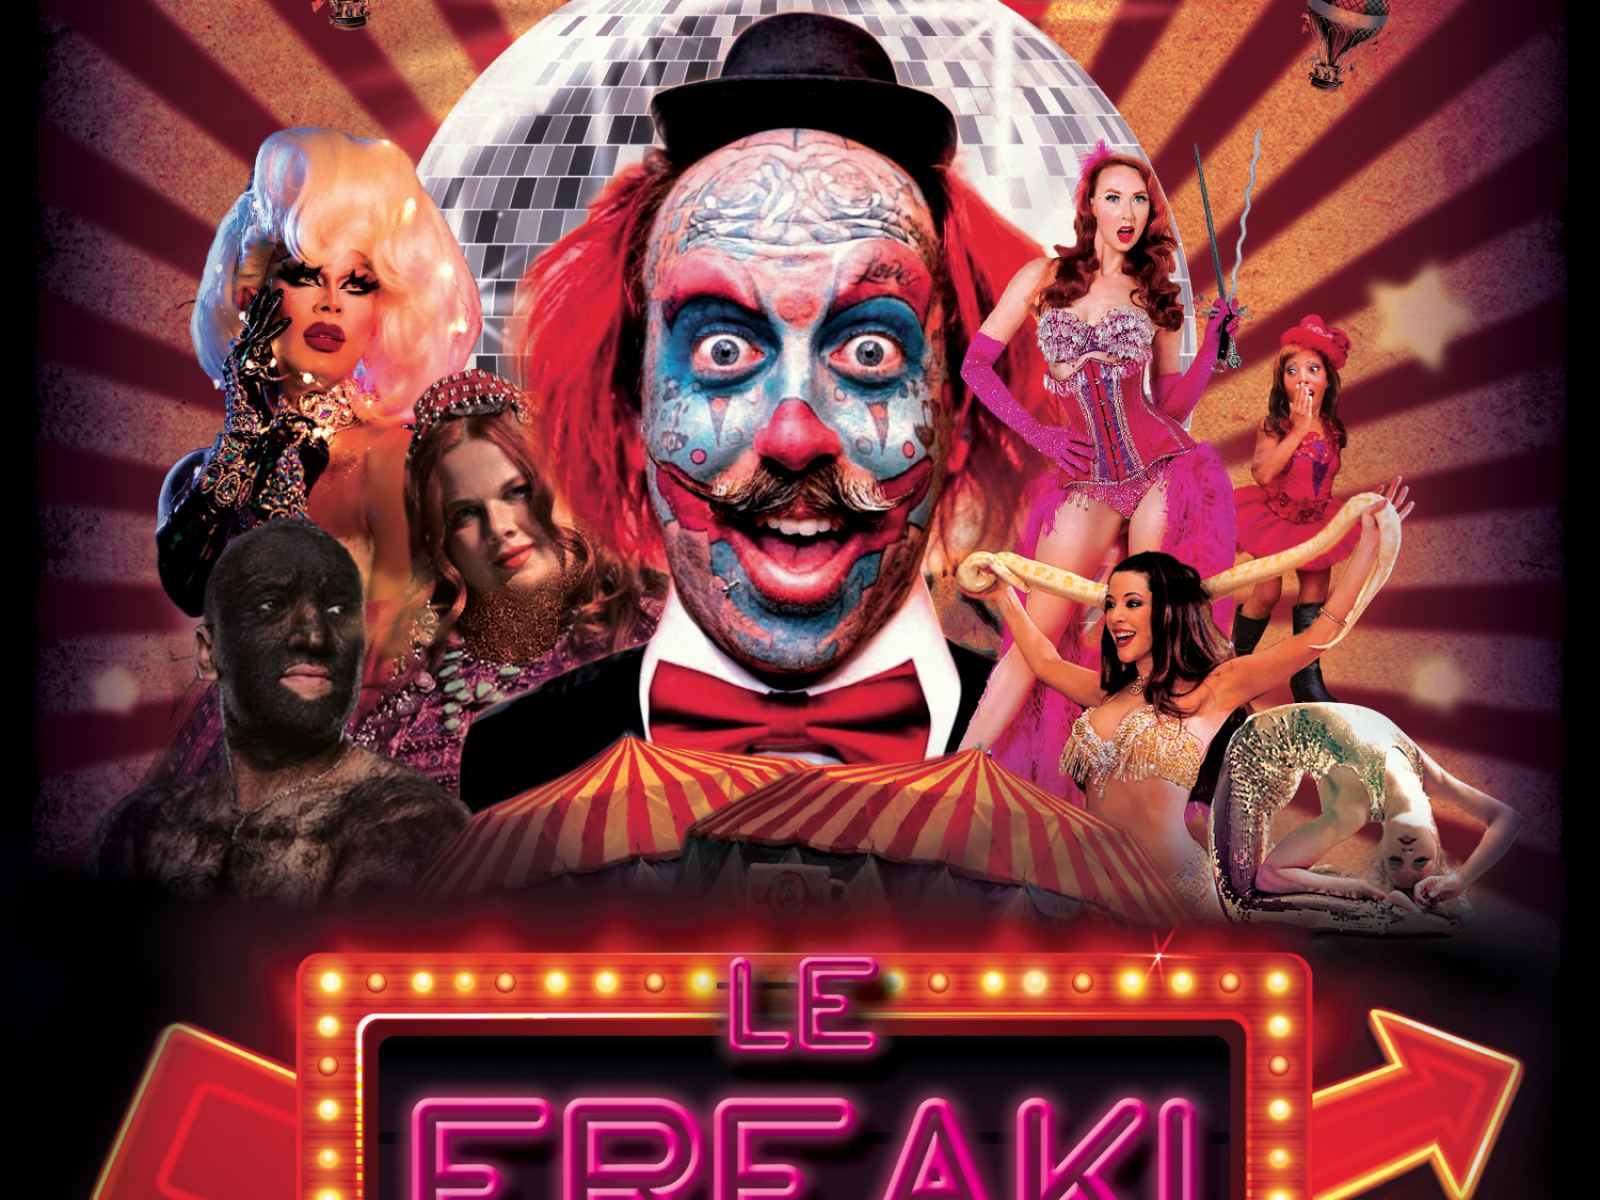 Le Freak La S Funkiest New Club Experience Discover